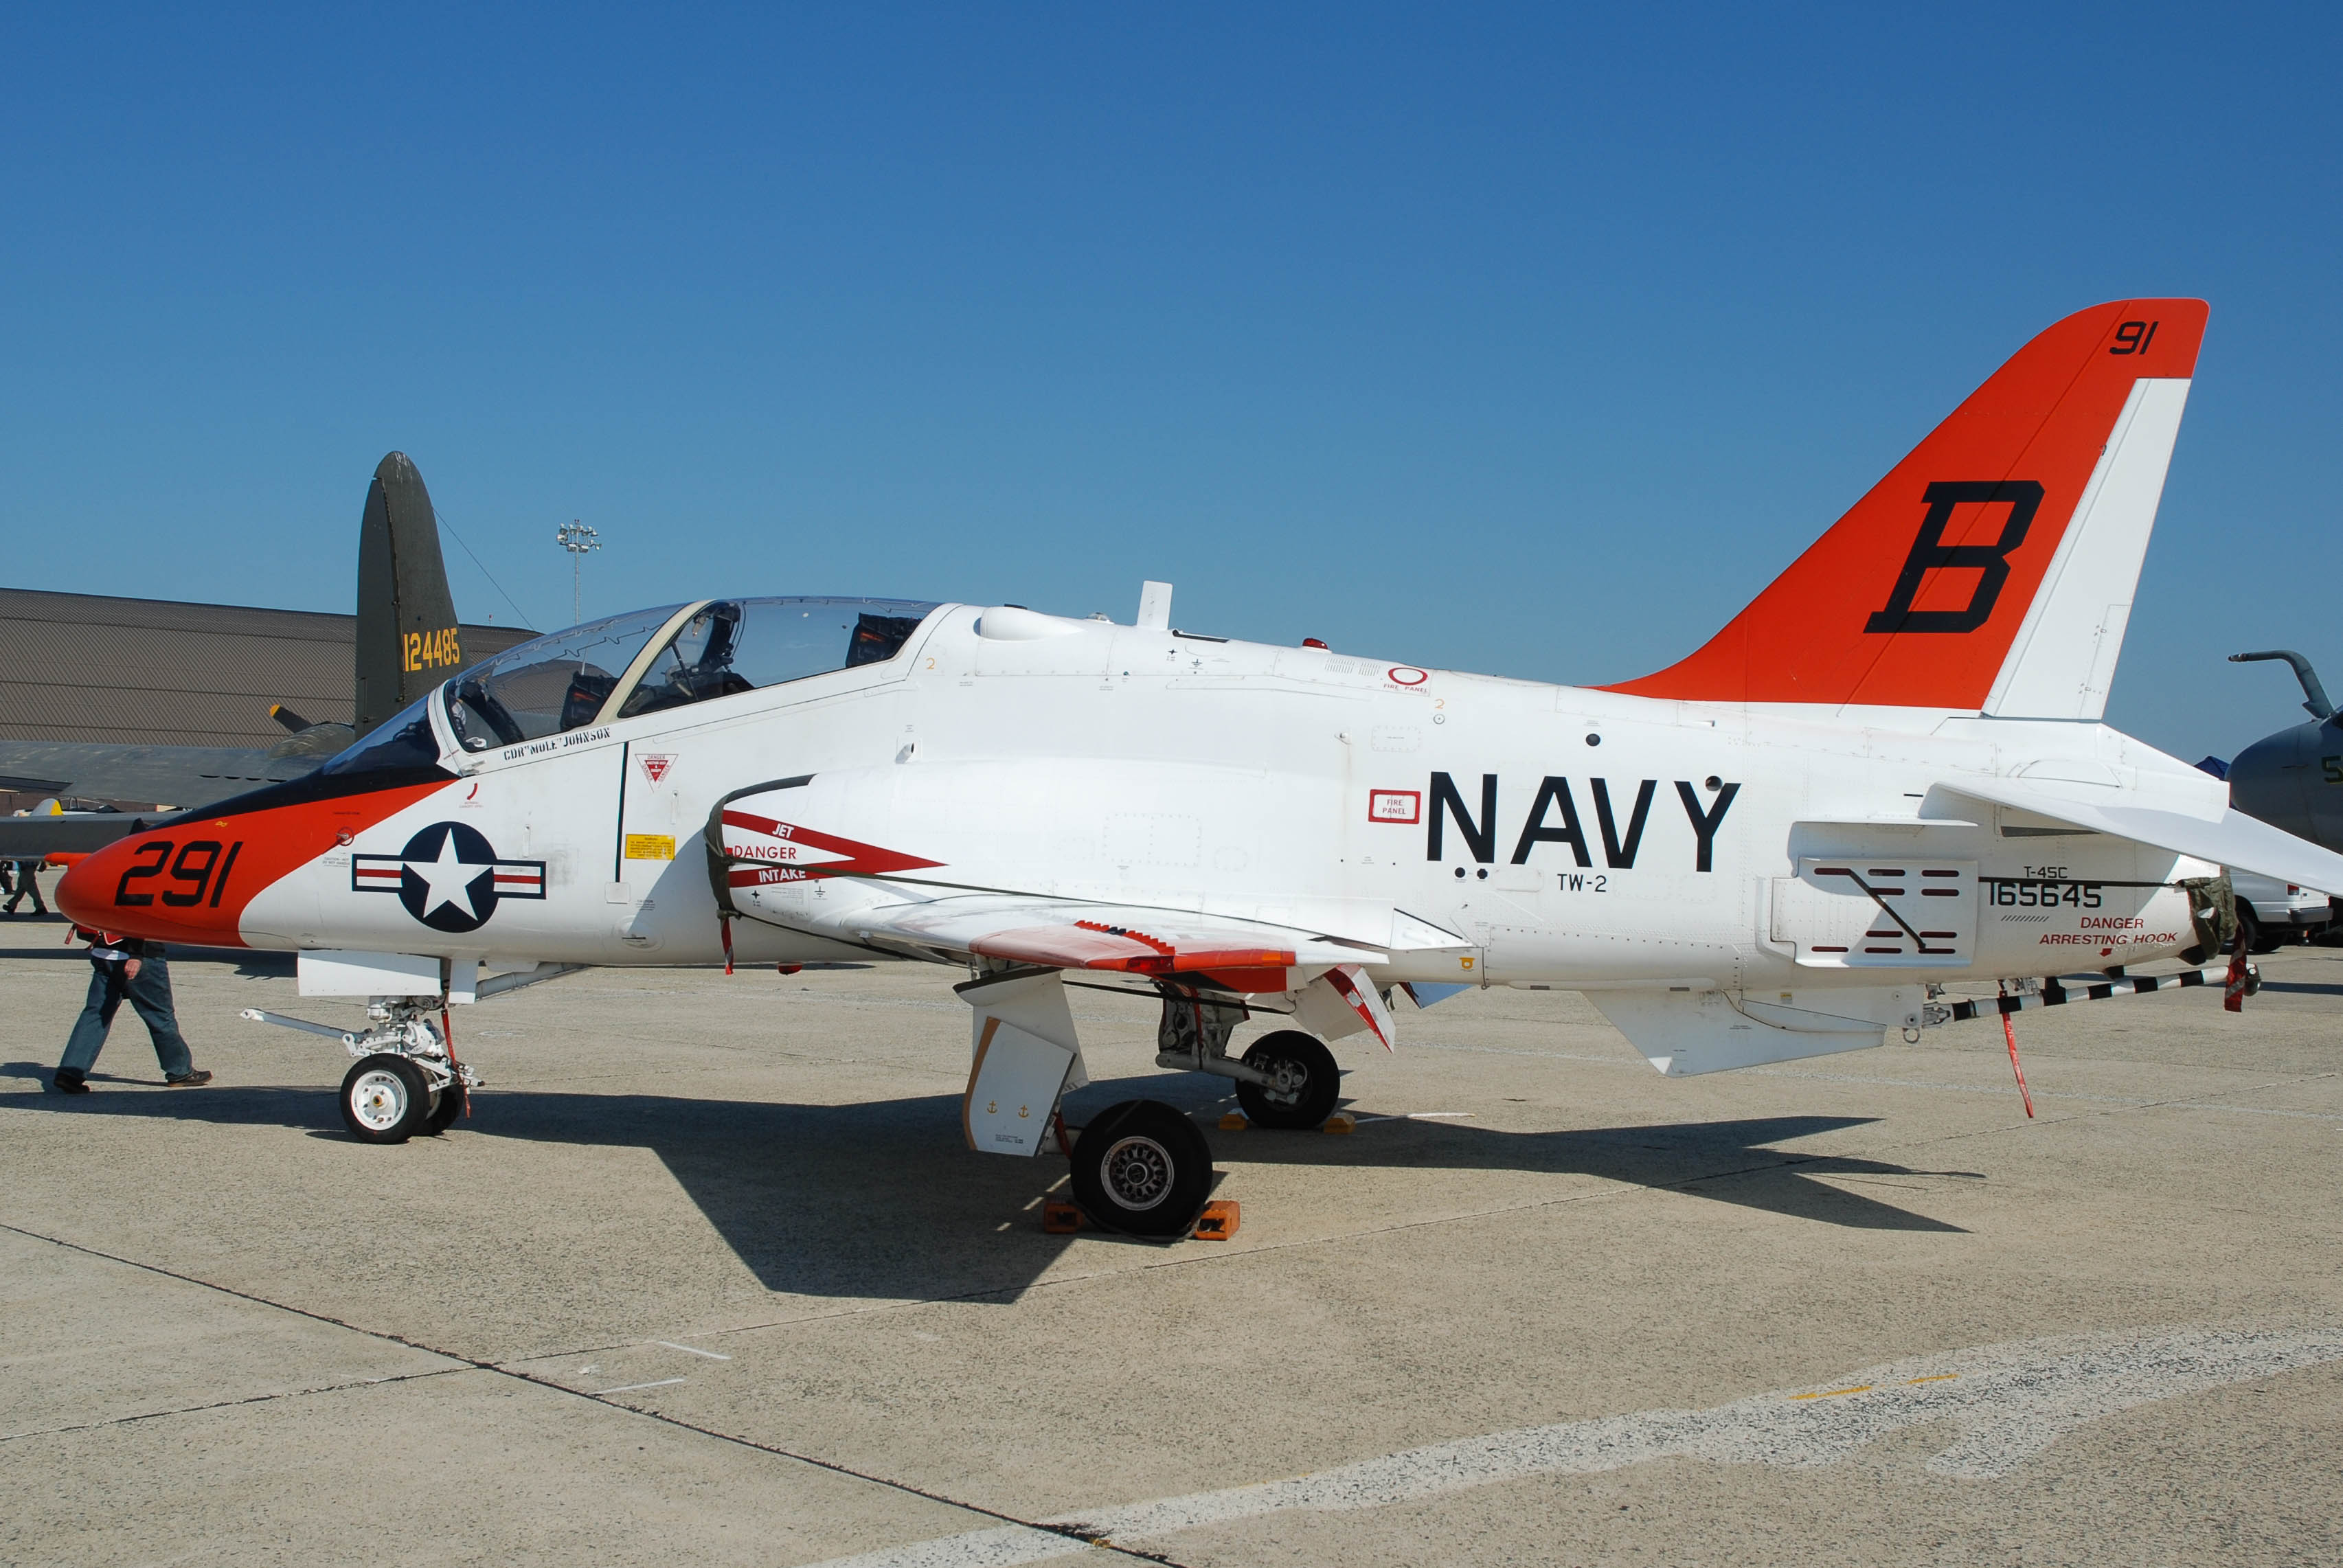 165645/165645 USN - United States Navy British Aerospace Hawk Airframe Information - AVSpotters.com